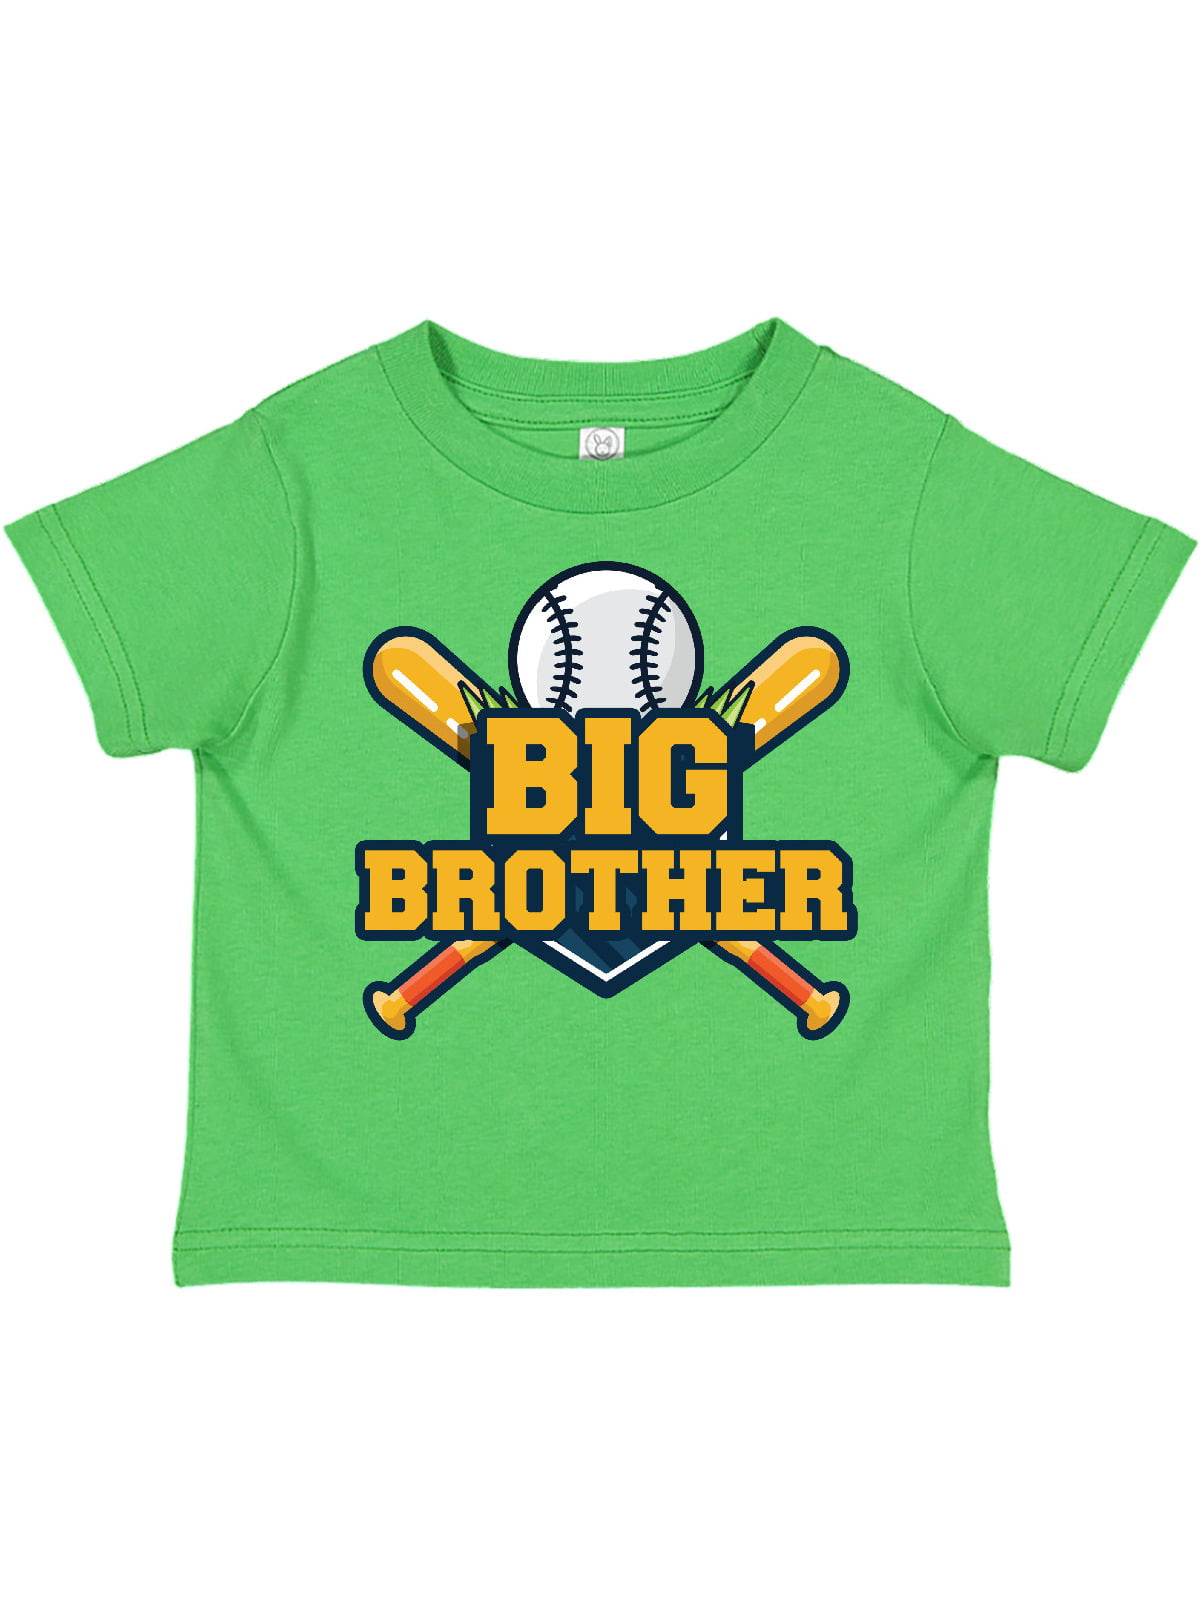 Tstars Big Brother Gift for Tractor Loving Boy 3/4 Sleeve Baseball Jersey Toddler Shirt 